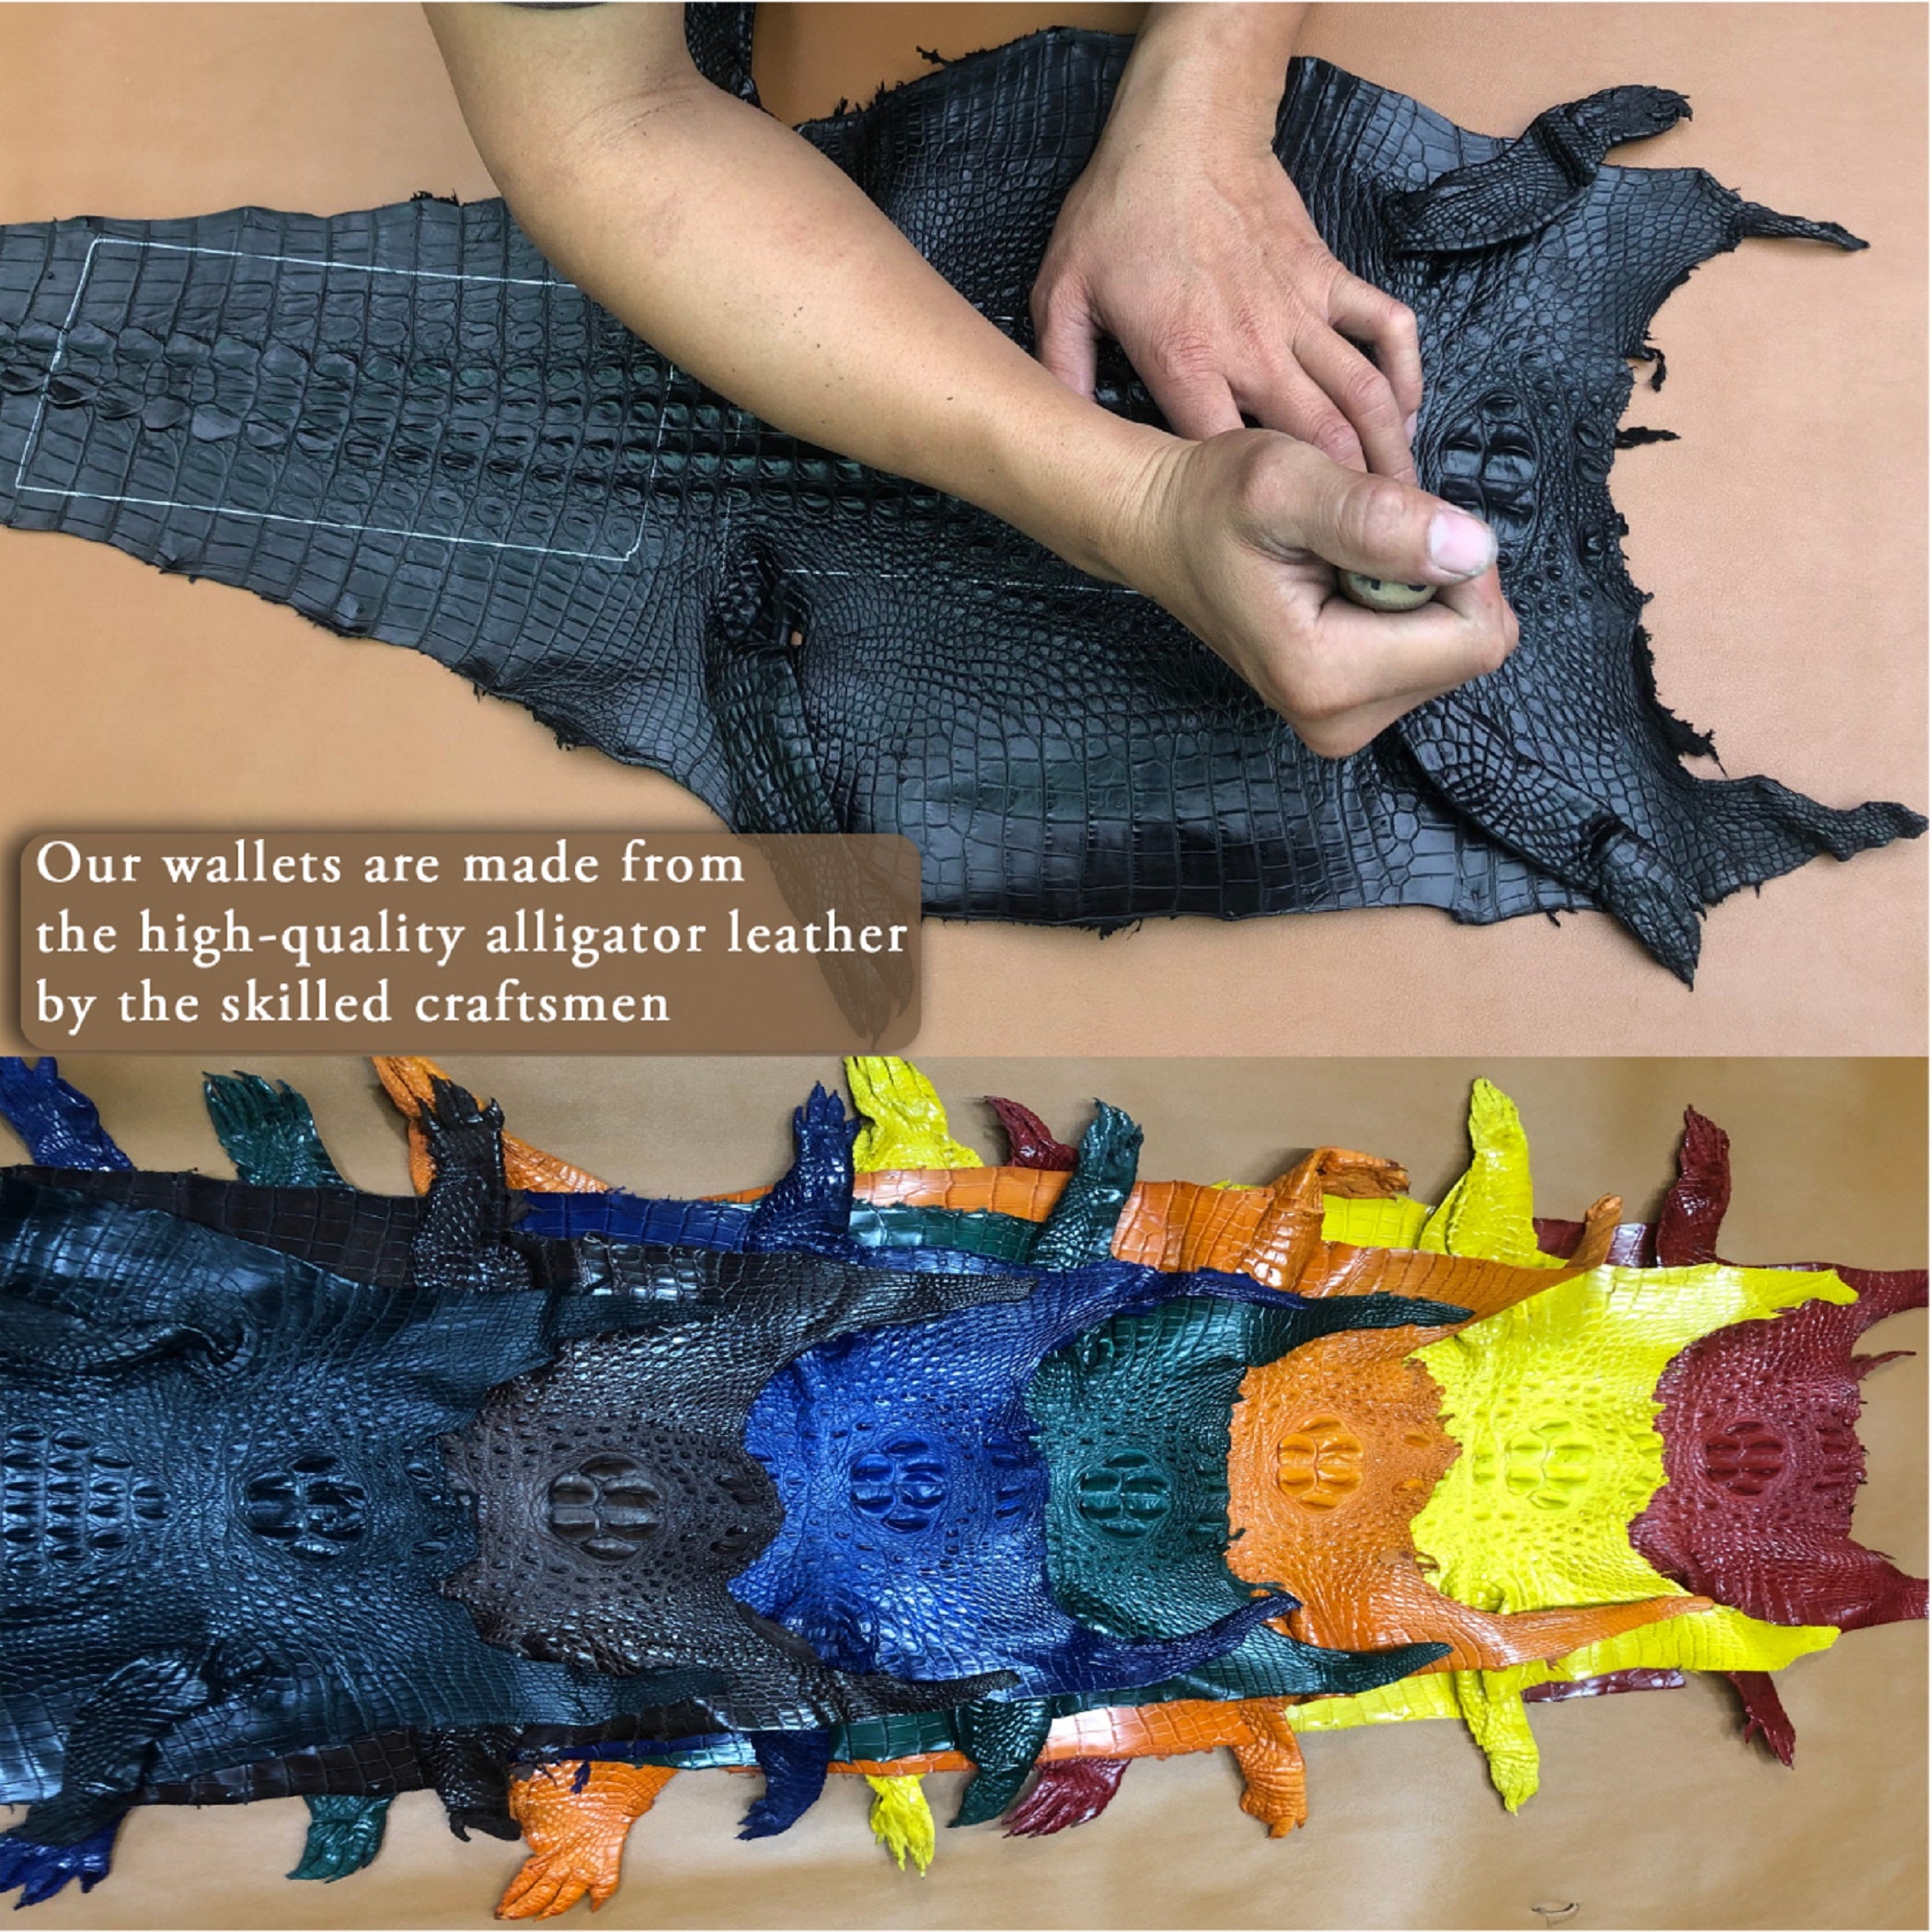 Black Alligator Leather Trifold Wallet RFID Blocking | TRI16